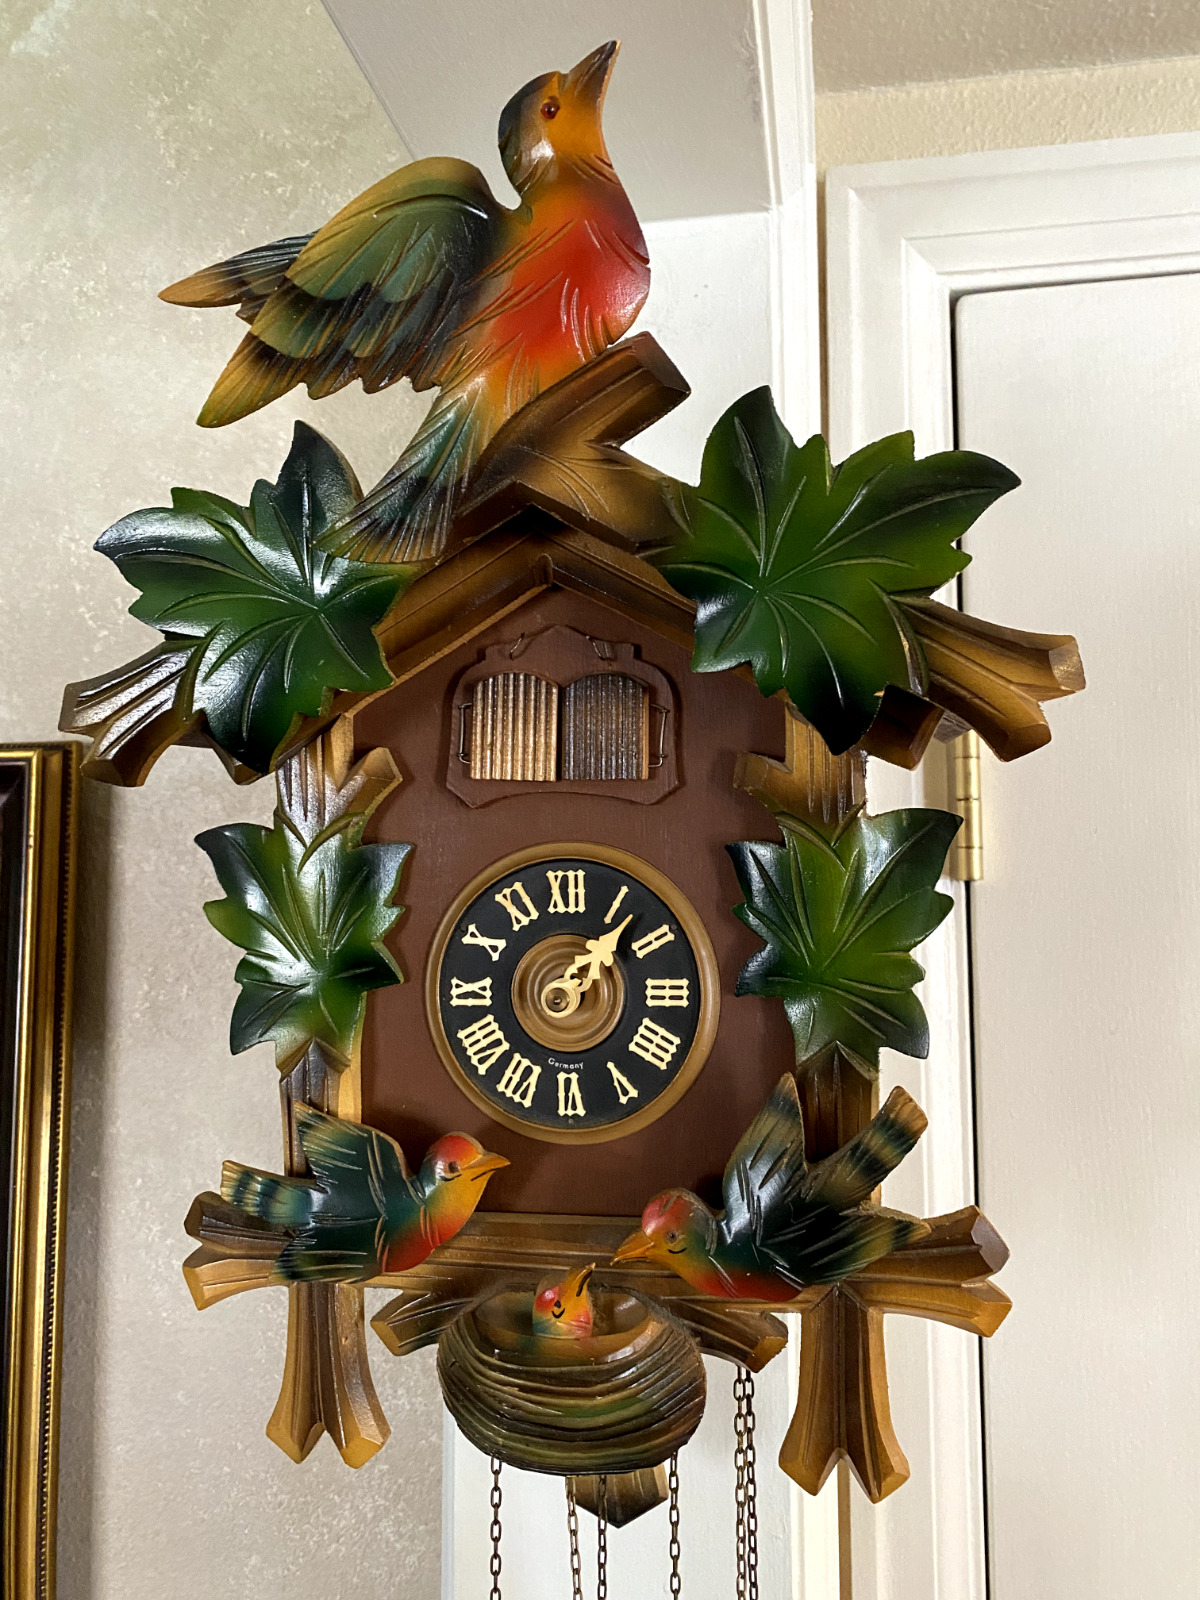 Cuckoo Clock w/ Music Box - Black Forest Germany - Vintage 1970s - Needs Repair